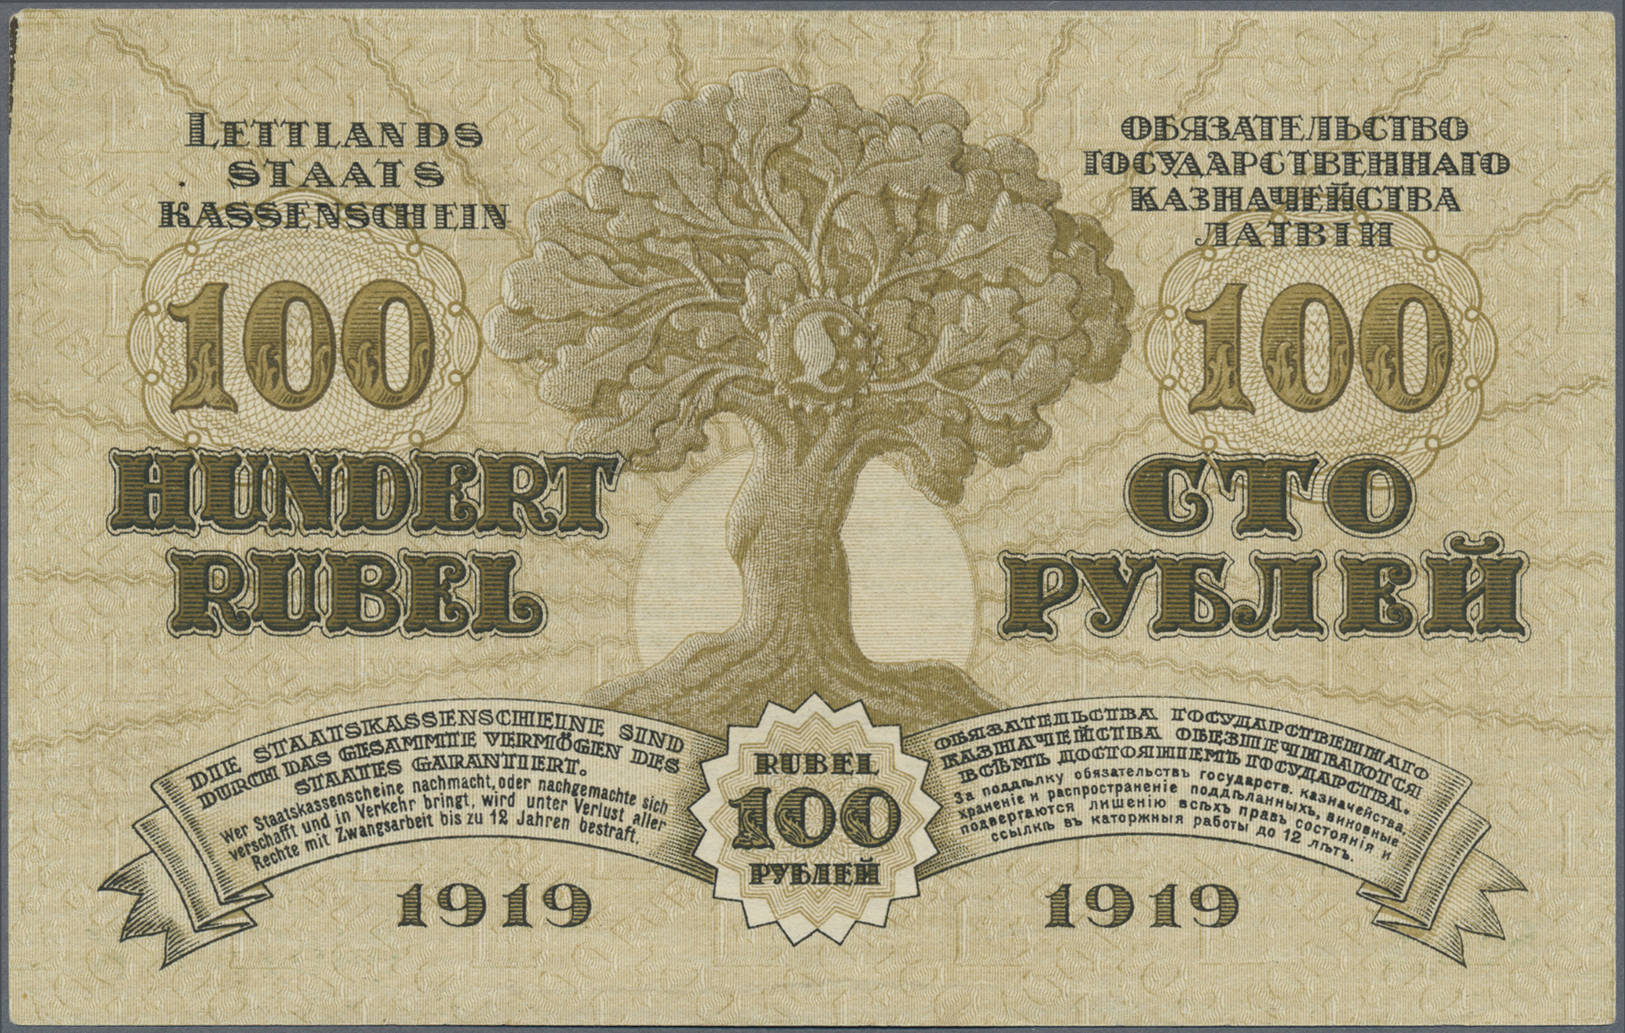 01421 Latvia / Lettland: 100 Rubli 1919 P. 7b, Series "K", Sign. Purins, Light Dints At Left Border, Condition: AUNC. - Latvia